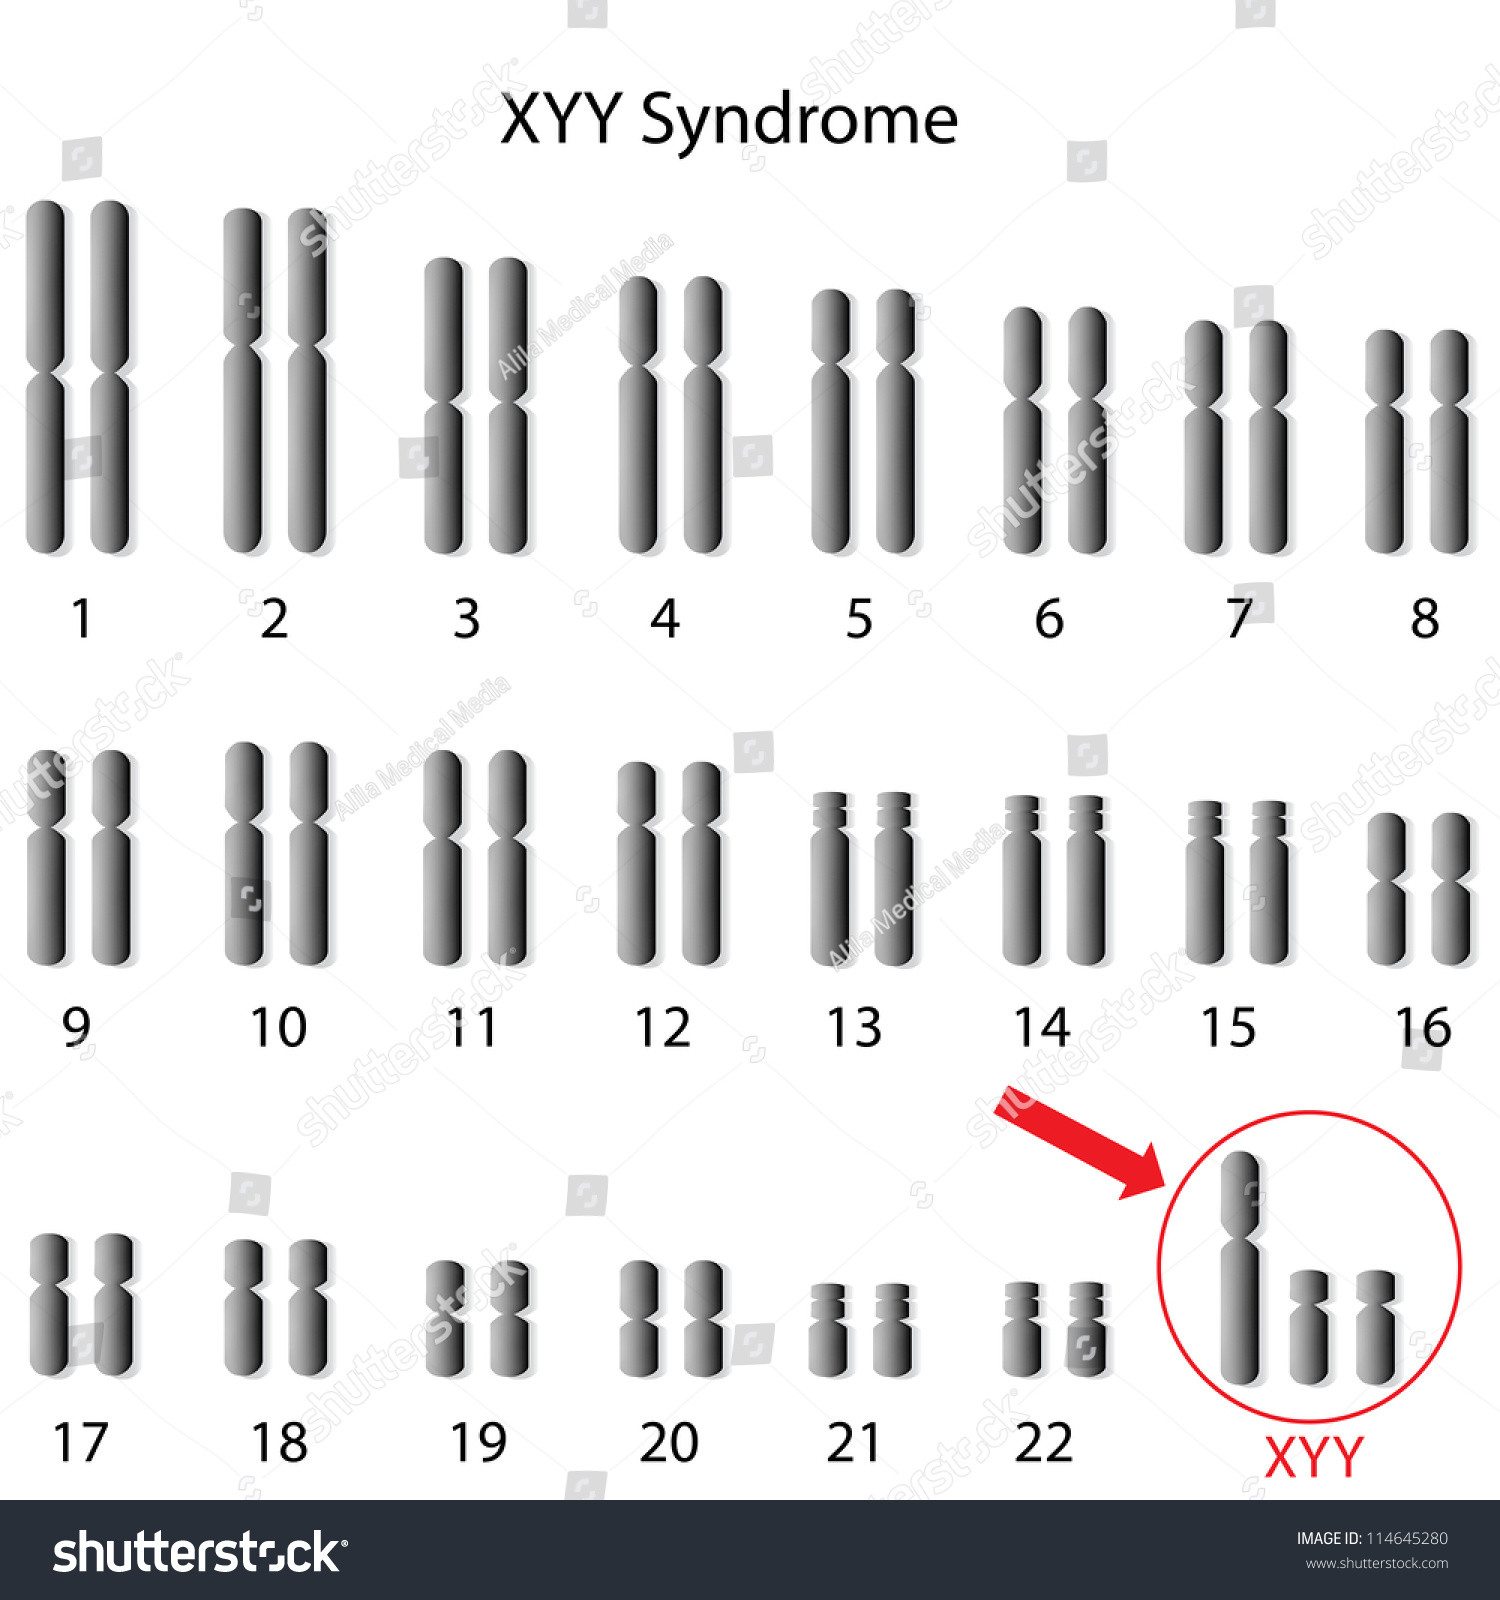 Xyy Super Male Syndrome Genome Stock Illustration 114645280 Shutterstock